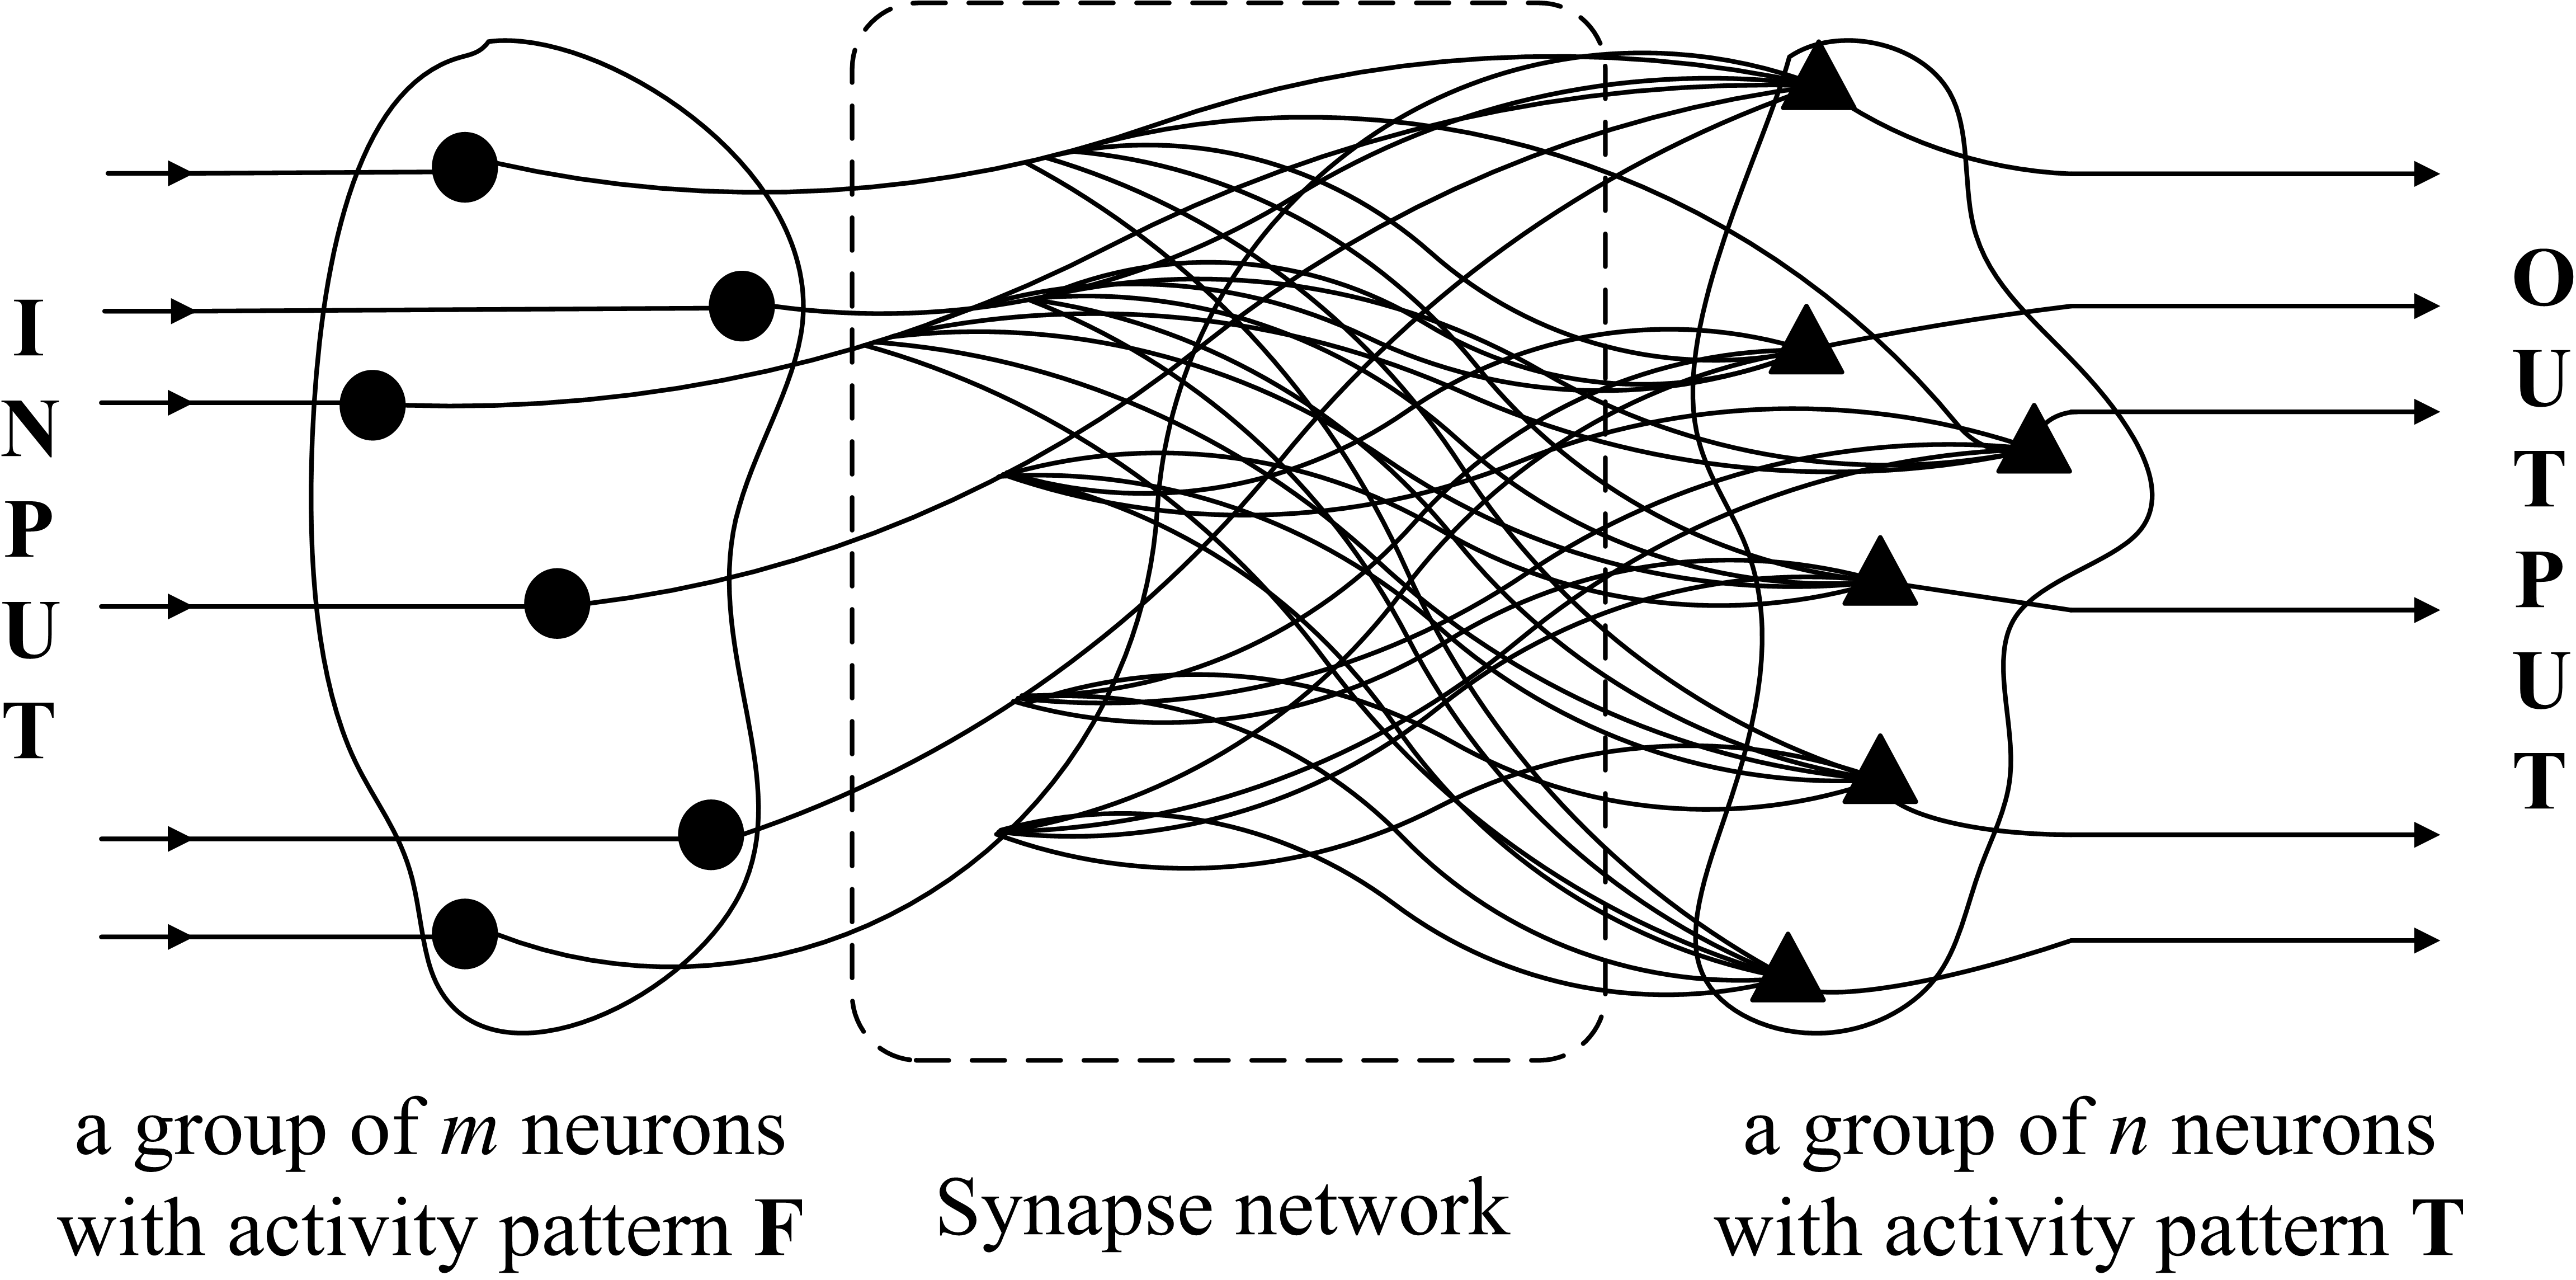 Basic neural network diagram